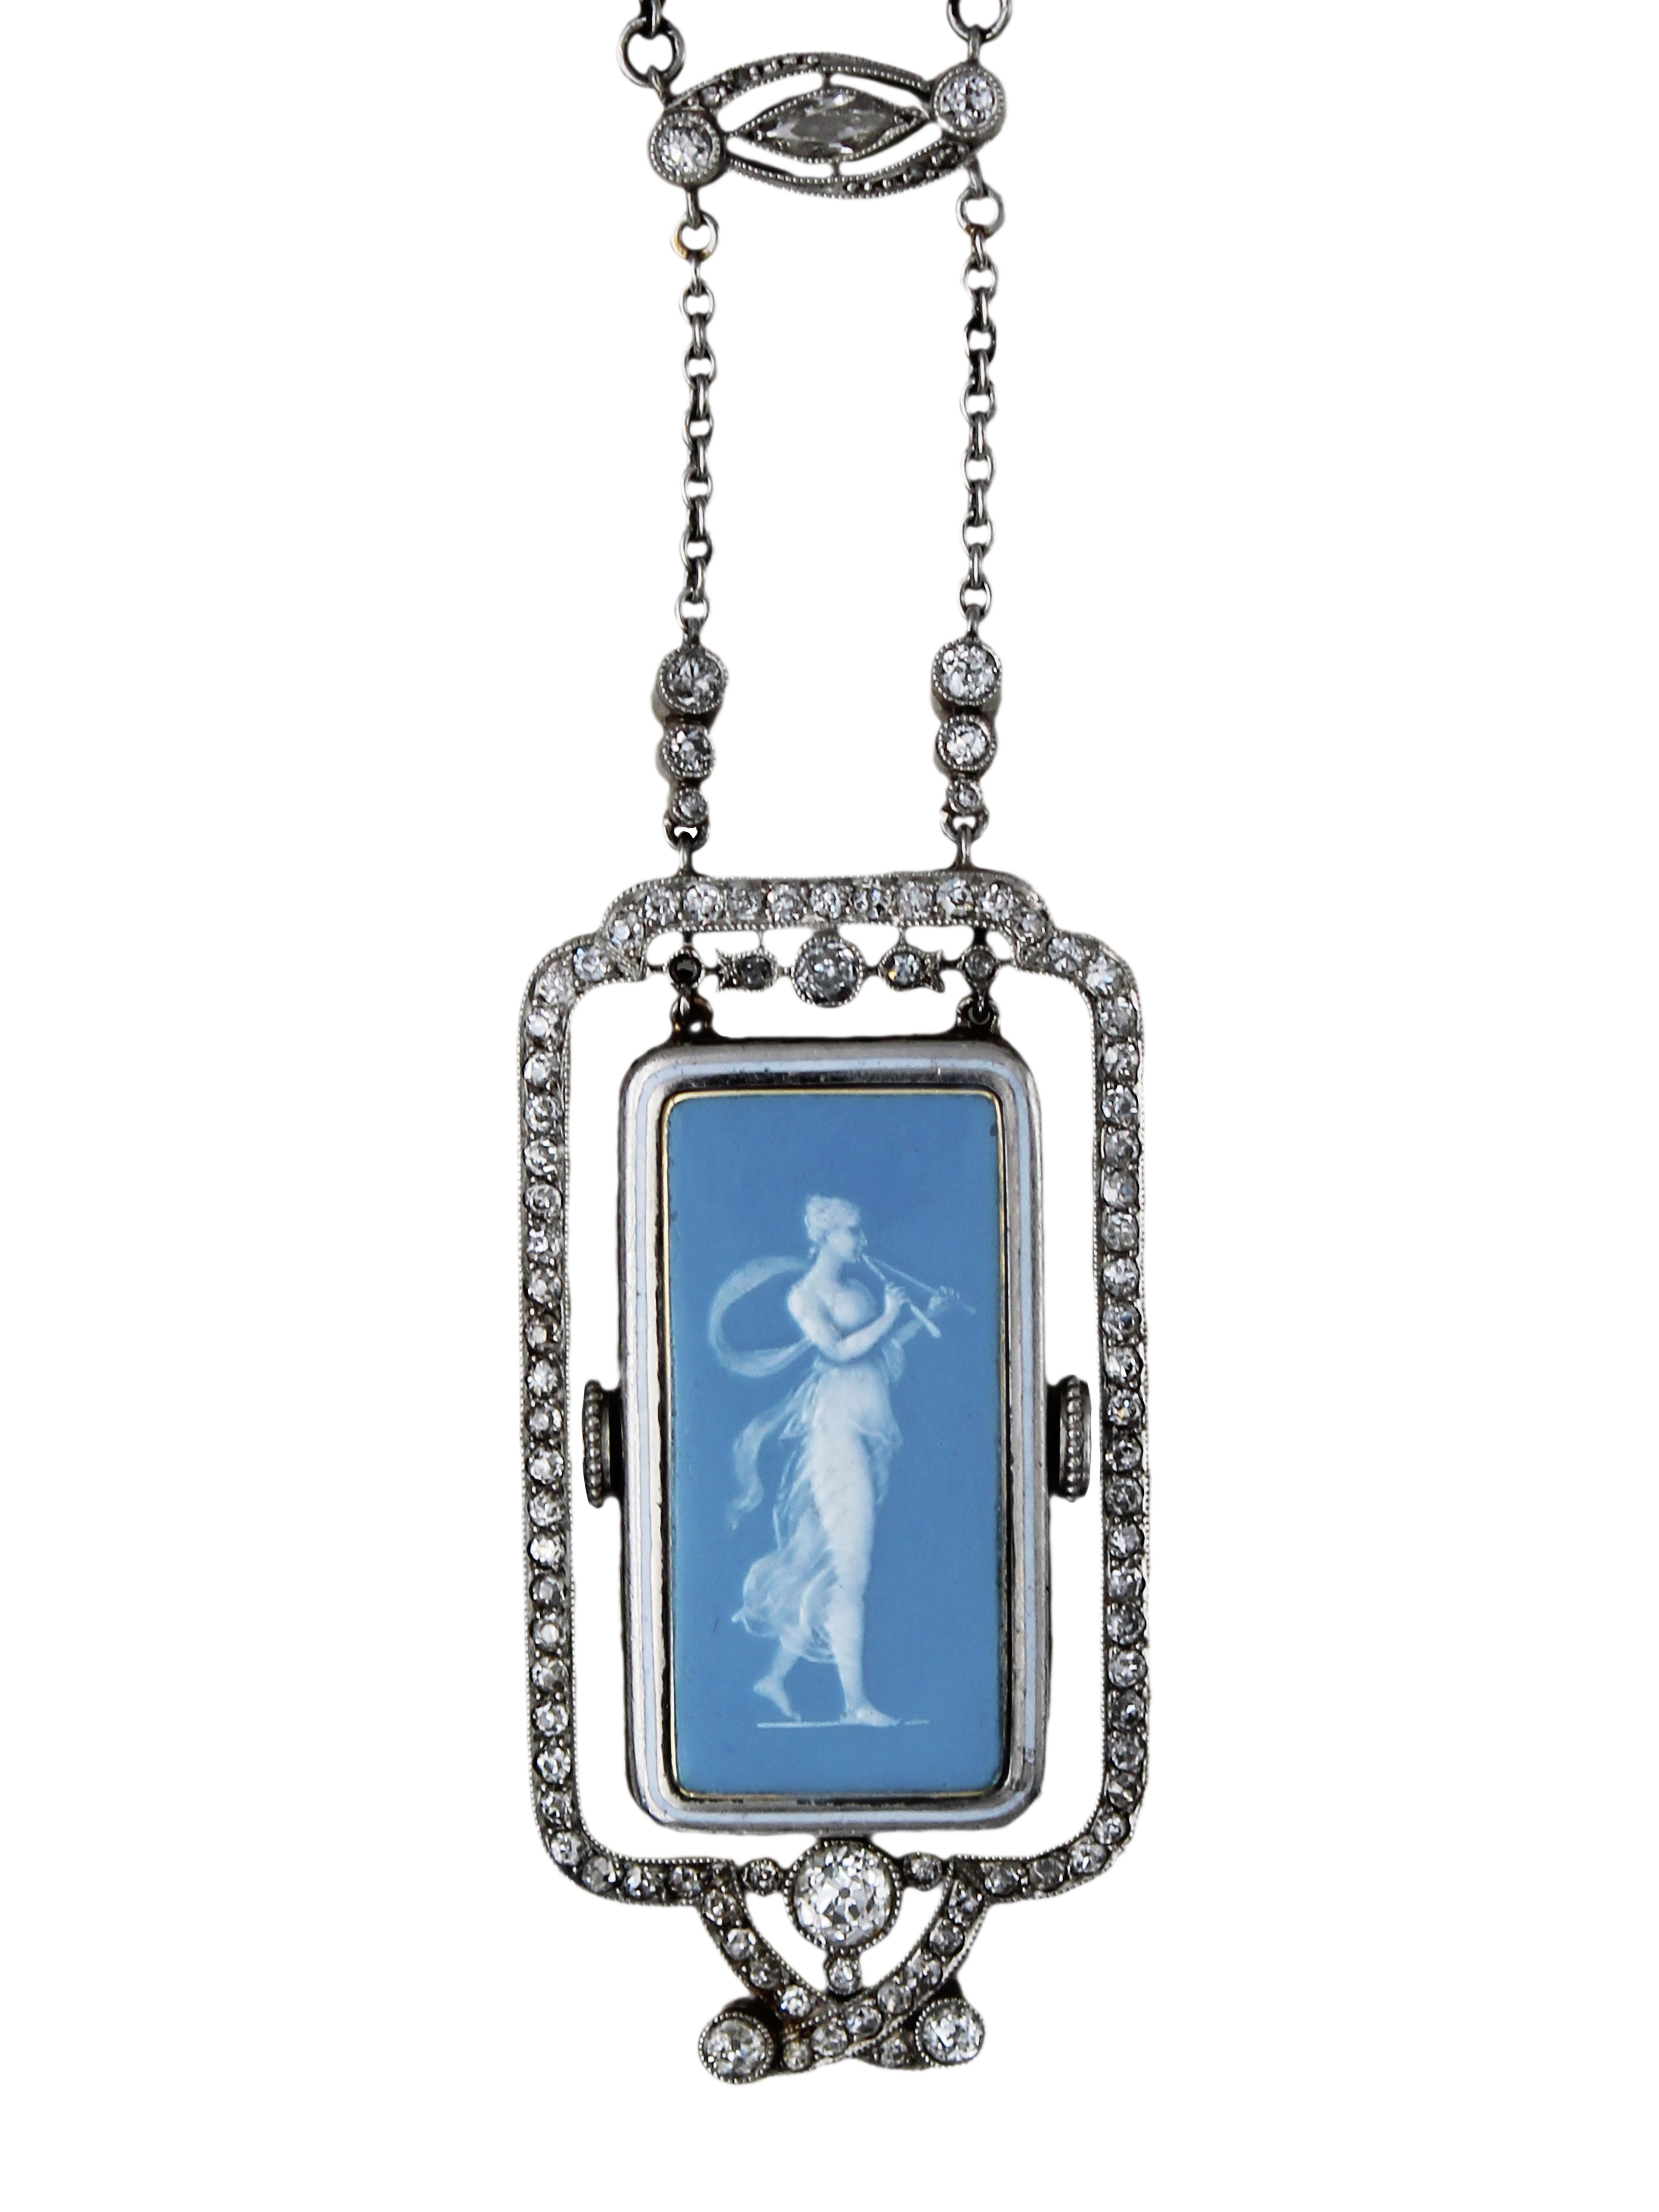 Patek Philippe Platinum, Diamond & Porcelain Pre-Art Deco Ladies' Pendant Watch & Chain w/ Extract c. 1888